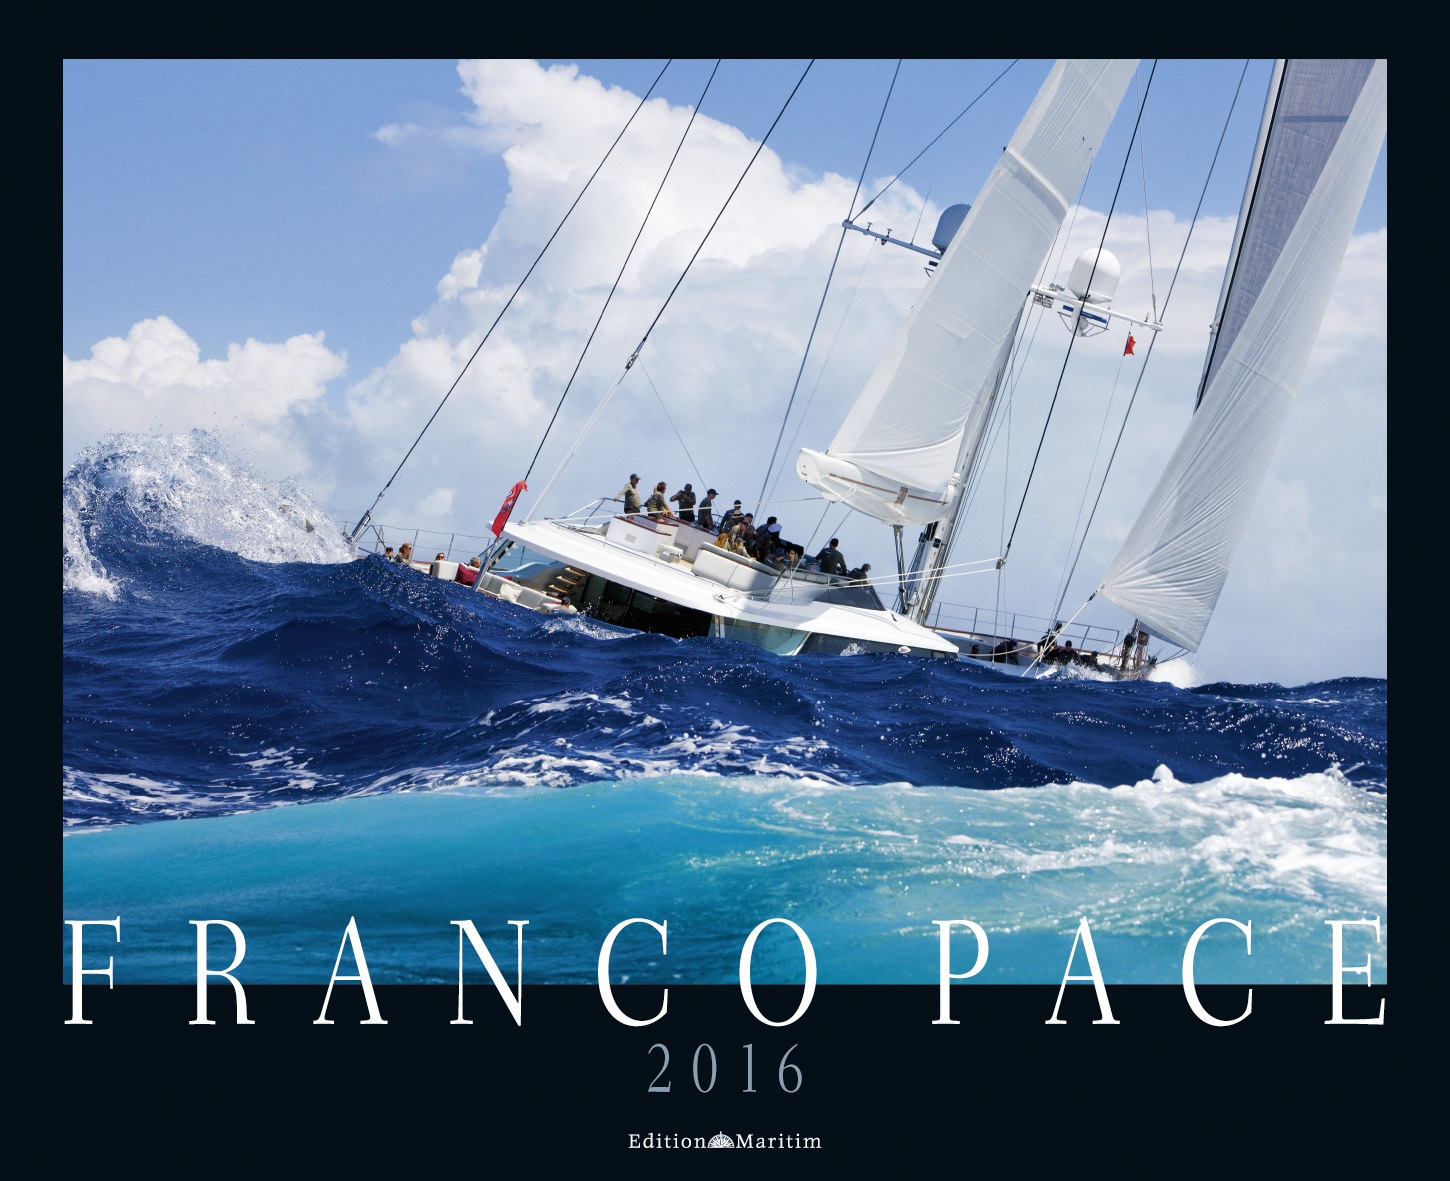 Franco Pace 2016